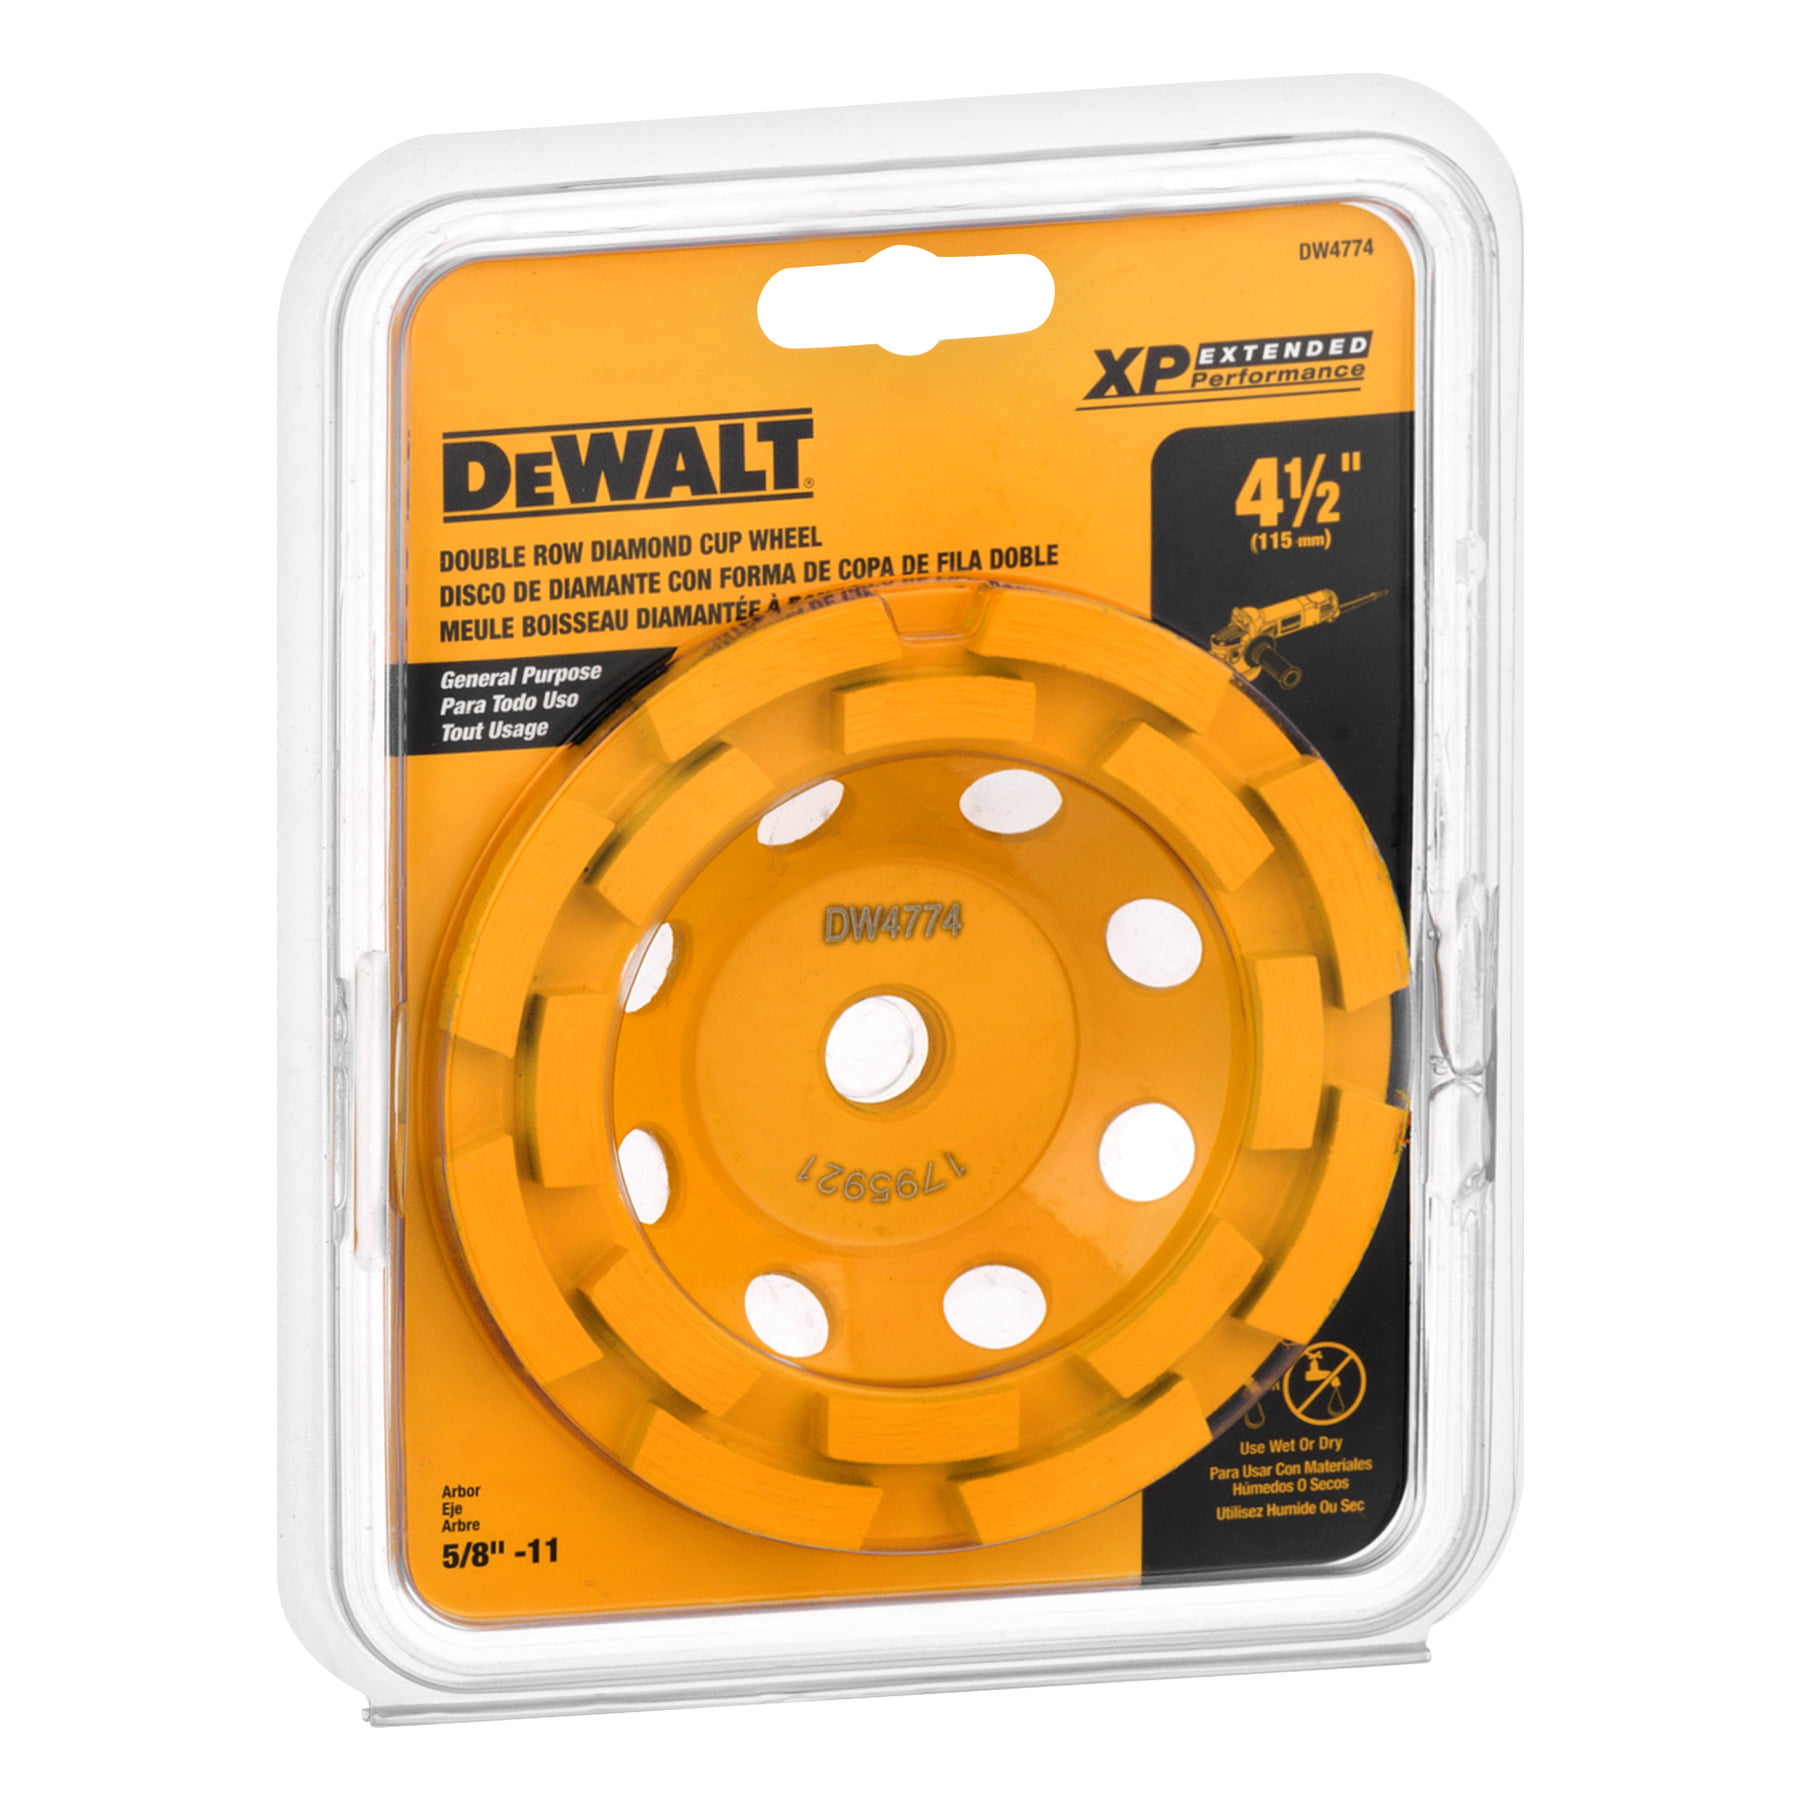 DeWalt Double Row Diamond Cup Wheel 4 1/2, 1.0 CT 